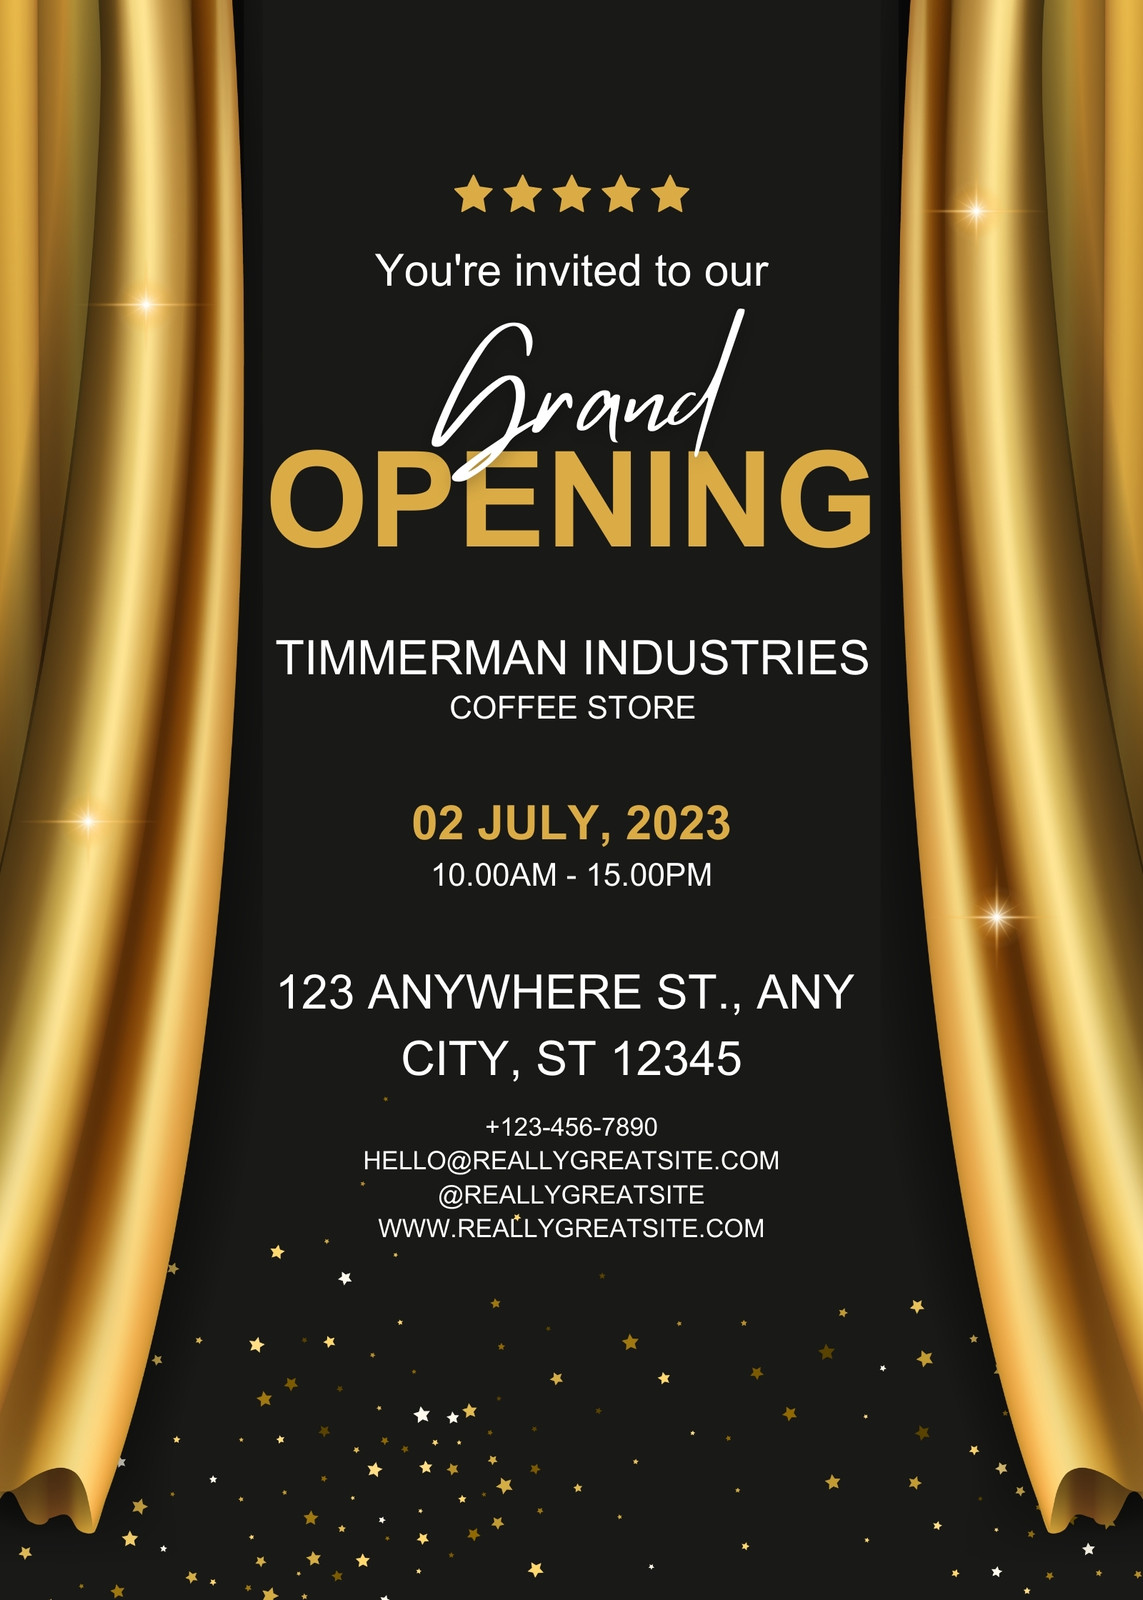 modern grand opening invitation